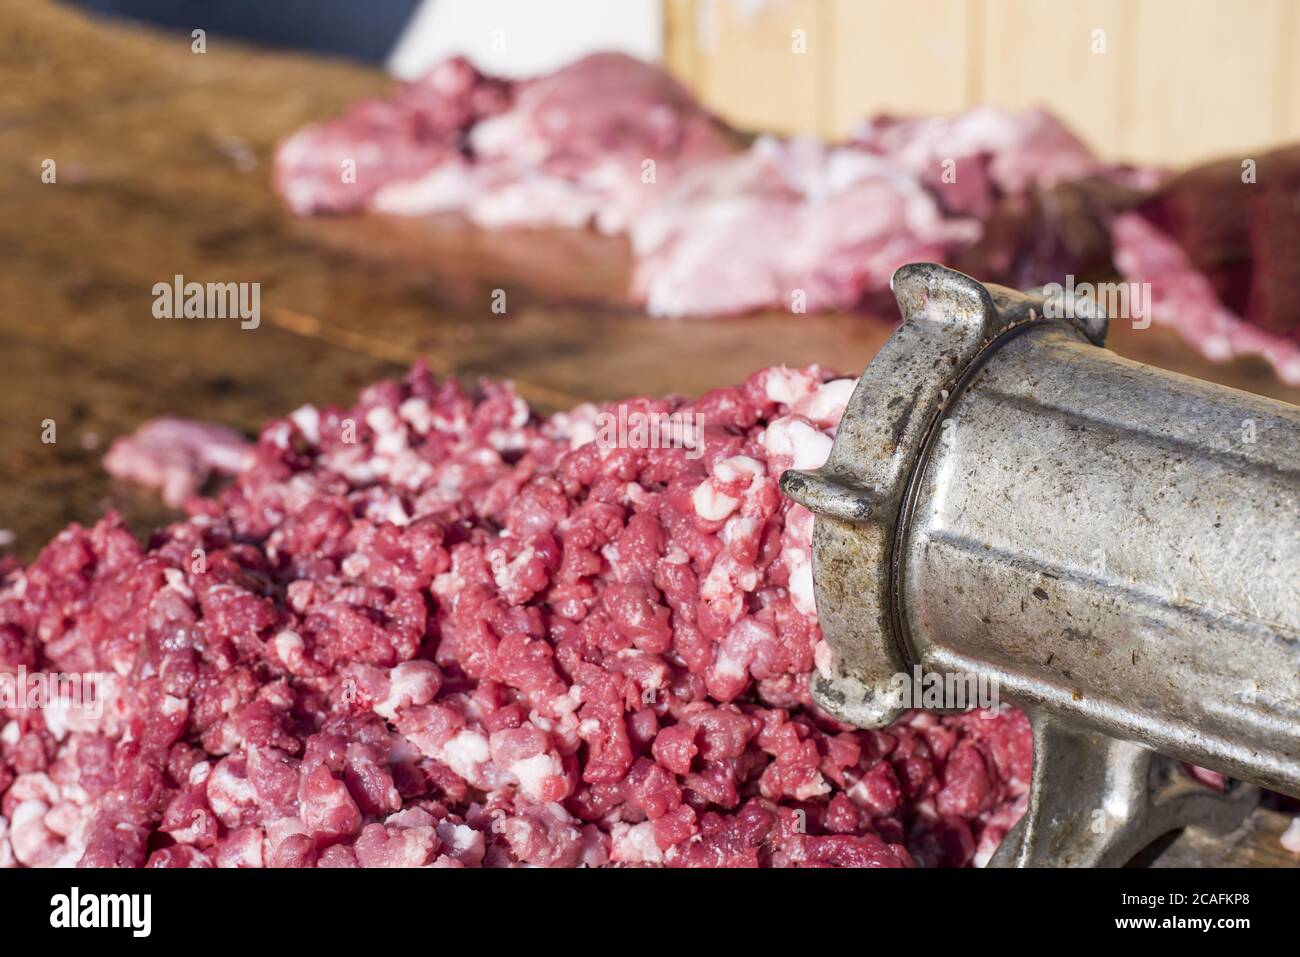 https://c8.alamy.com/comp/2CAFKP8/iron-meat-grinder-grinding-beef-in-the-kitchen-2CAFKP8.jpg